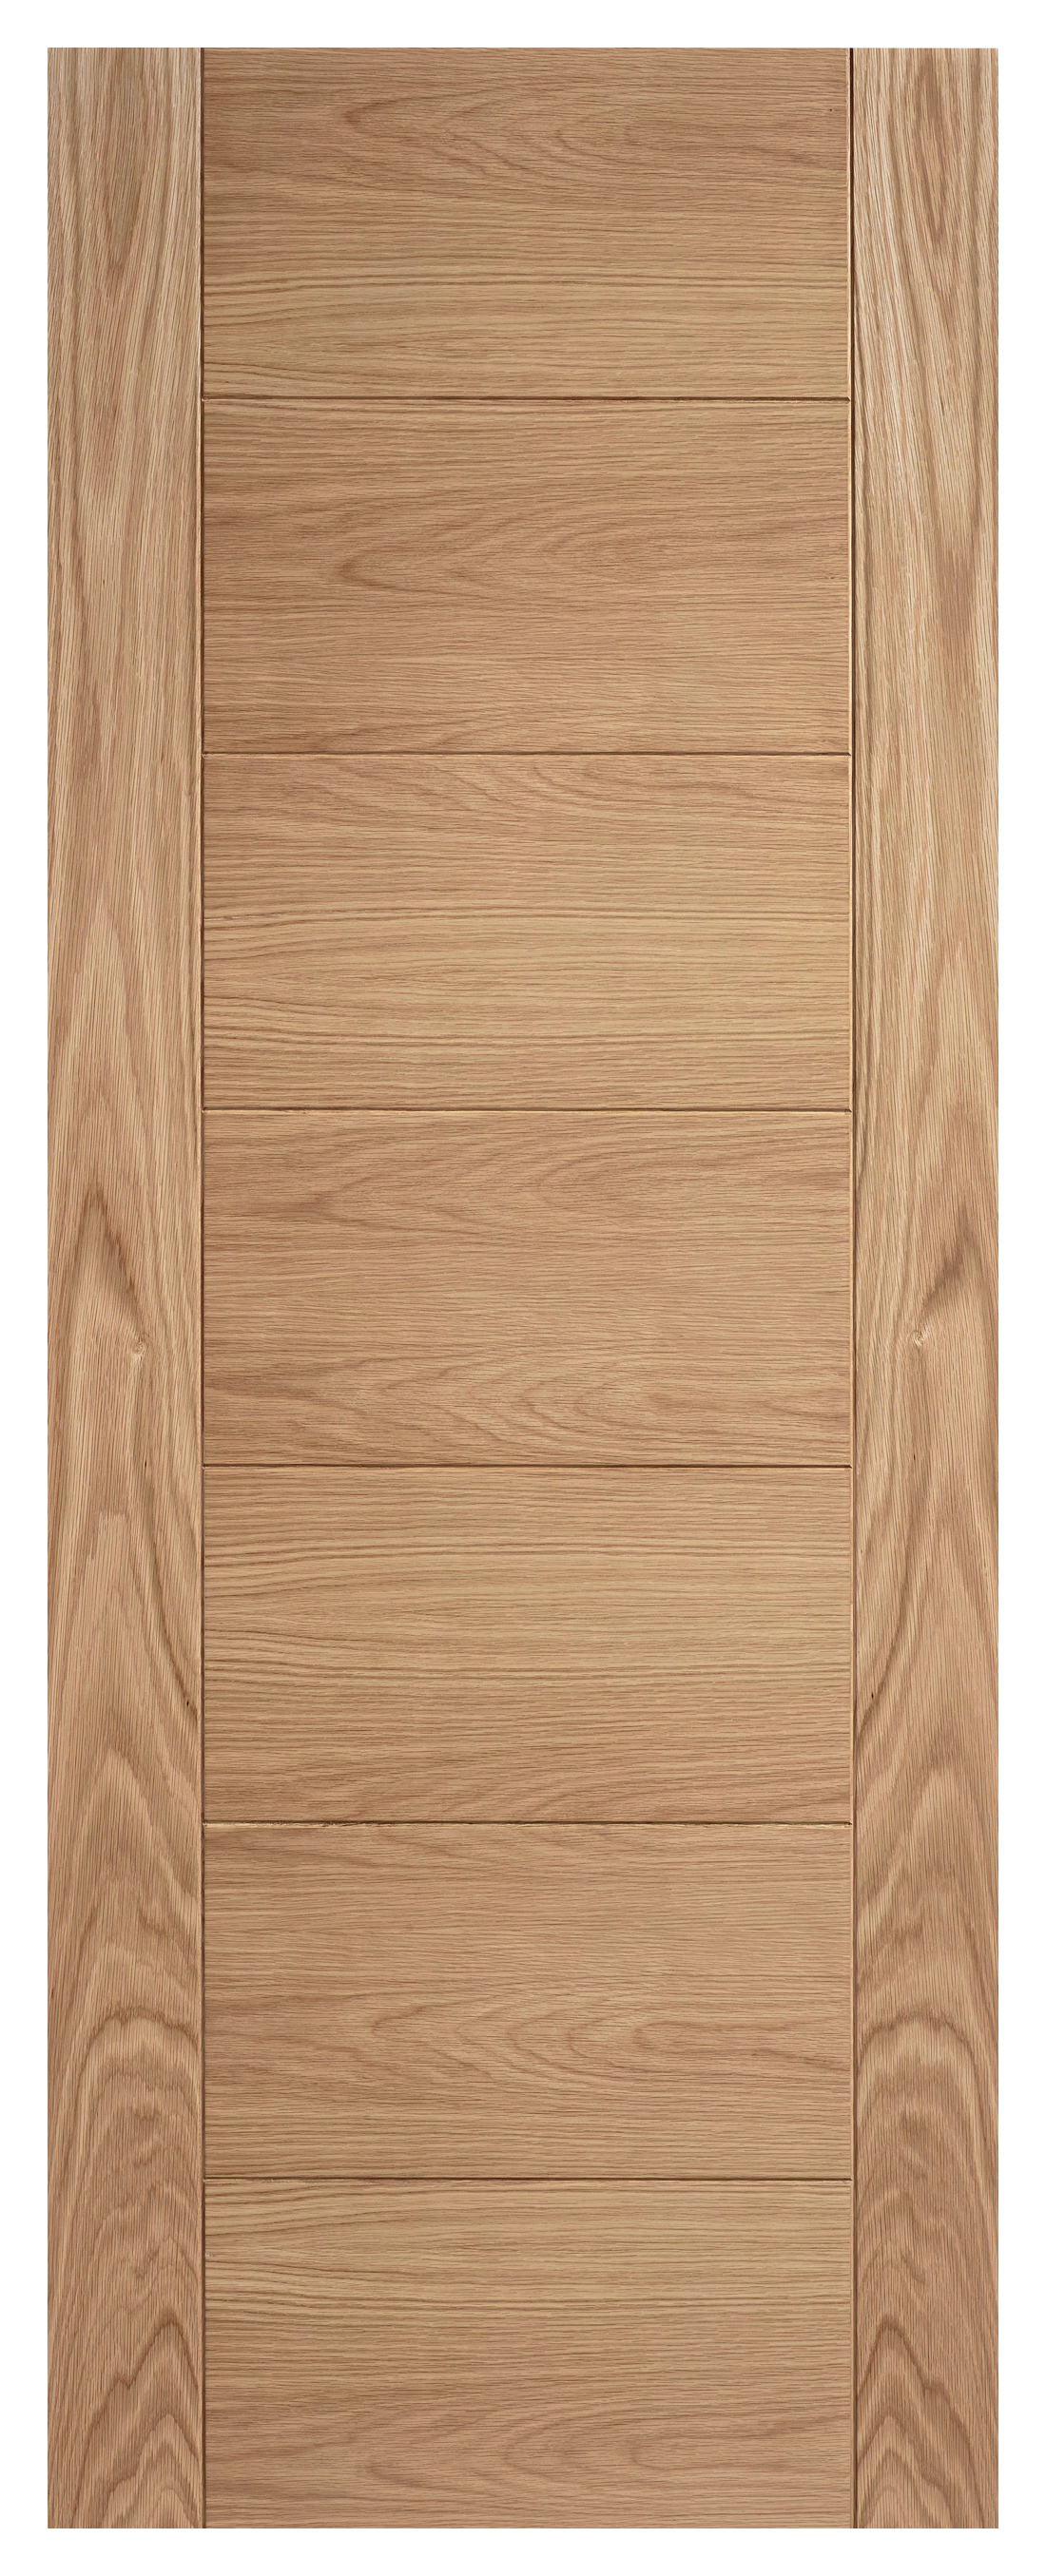 Image of LPD Internal Carini 7 Panel Unfinished Oak Solid Core Door - 726 x 2040mm